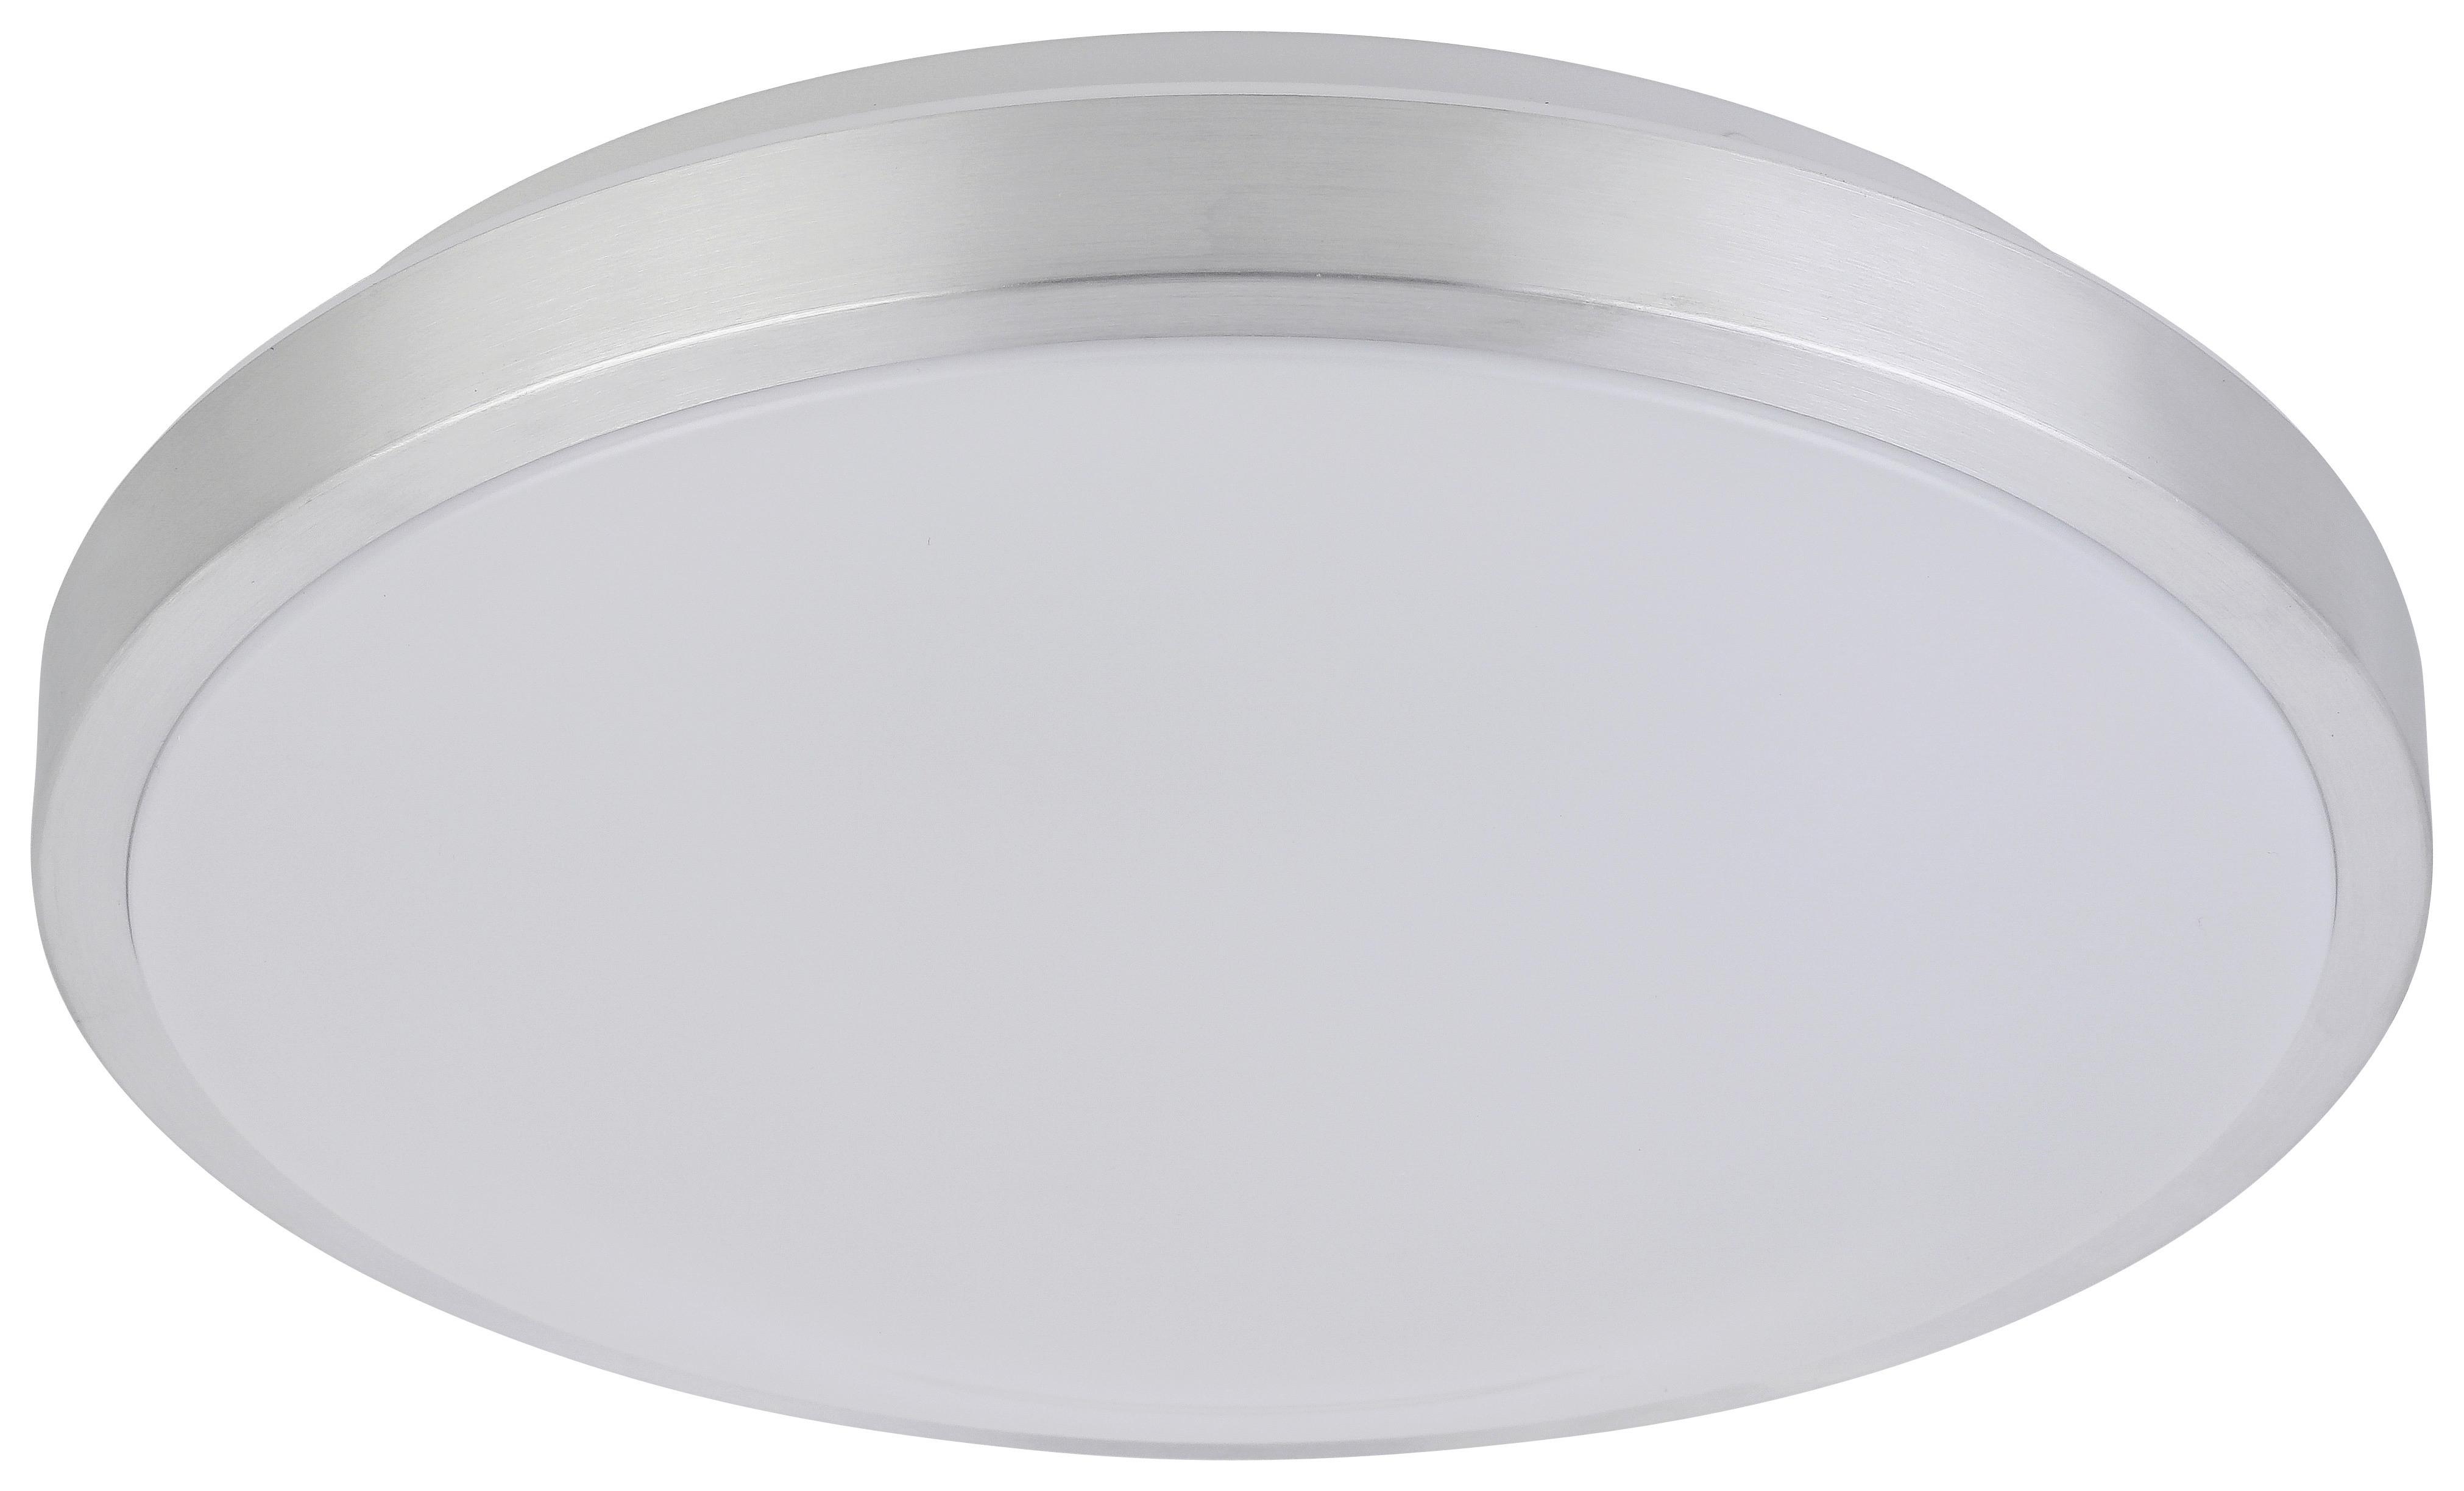 Mennyezeti Lámpa Winfried 30cm - Fehér/Alu, modern, Műanyag/Fém (30/9cm) - Modern Living